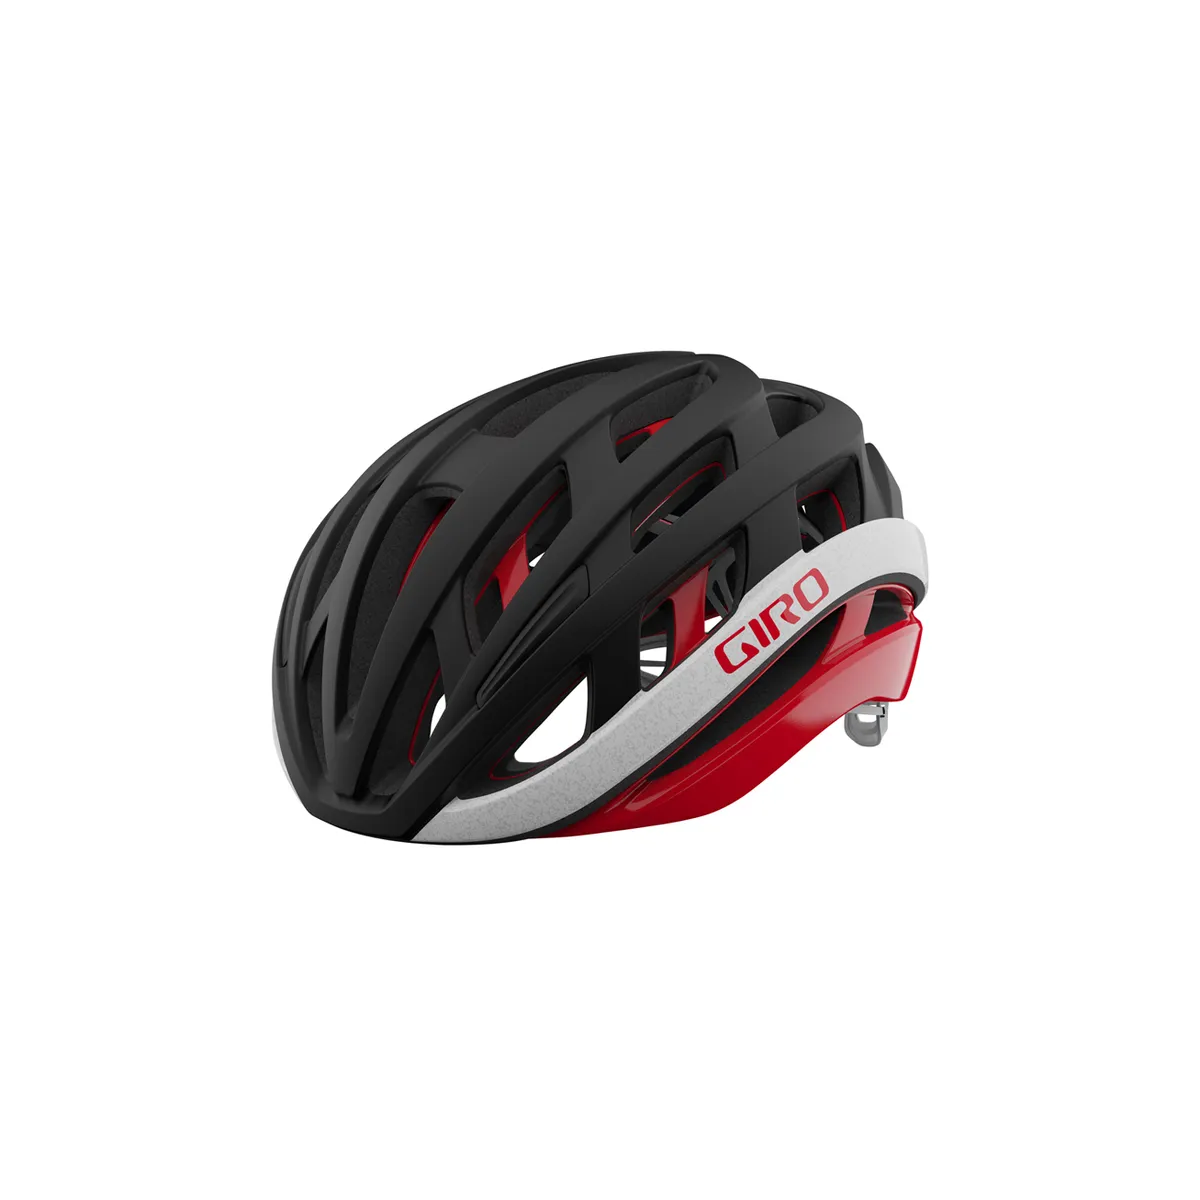 Giro's new Helios Spherical helmet